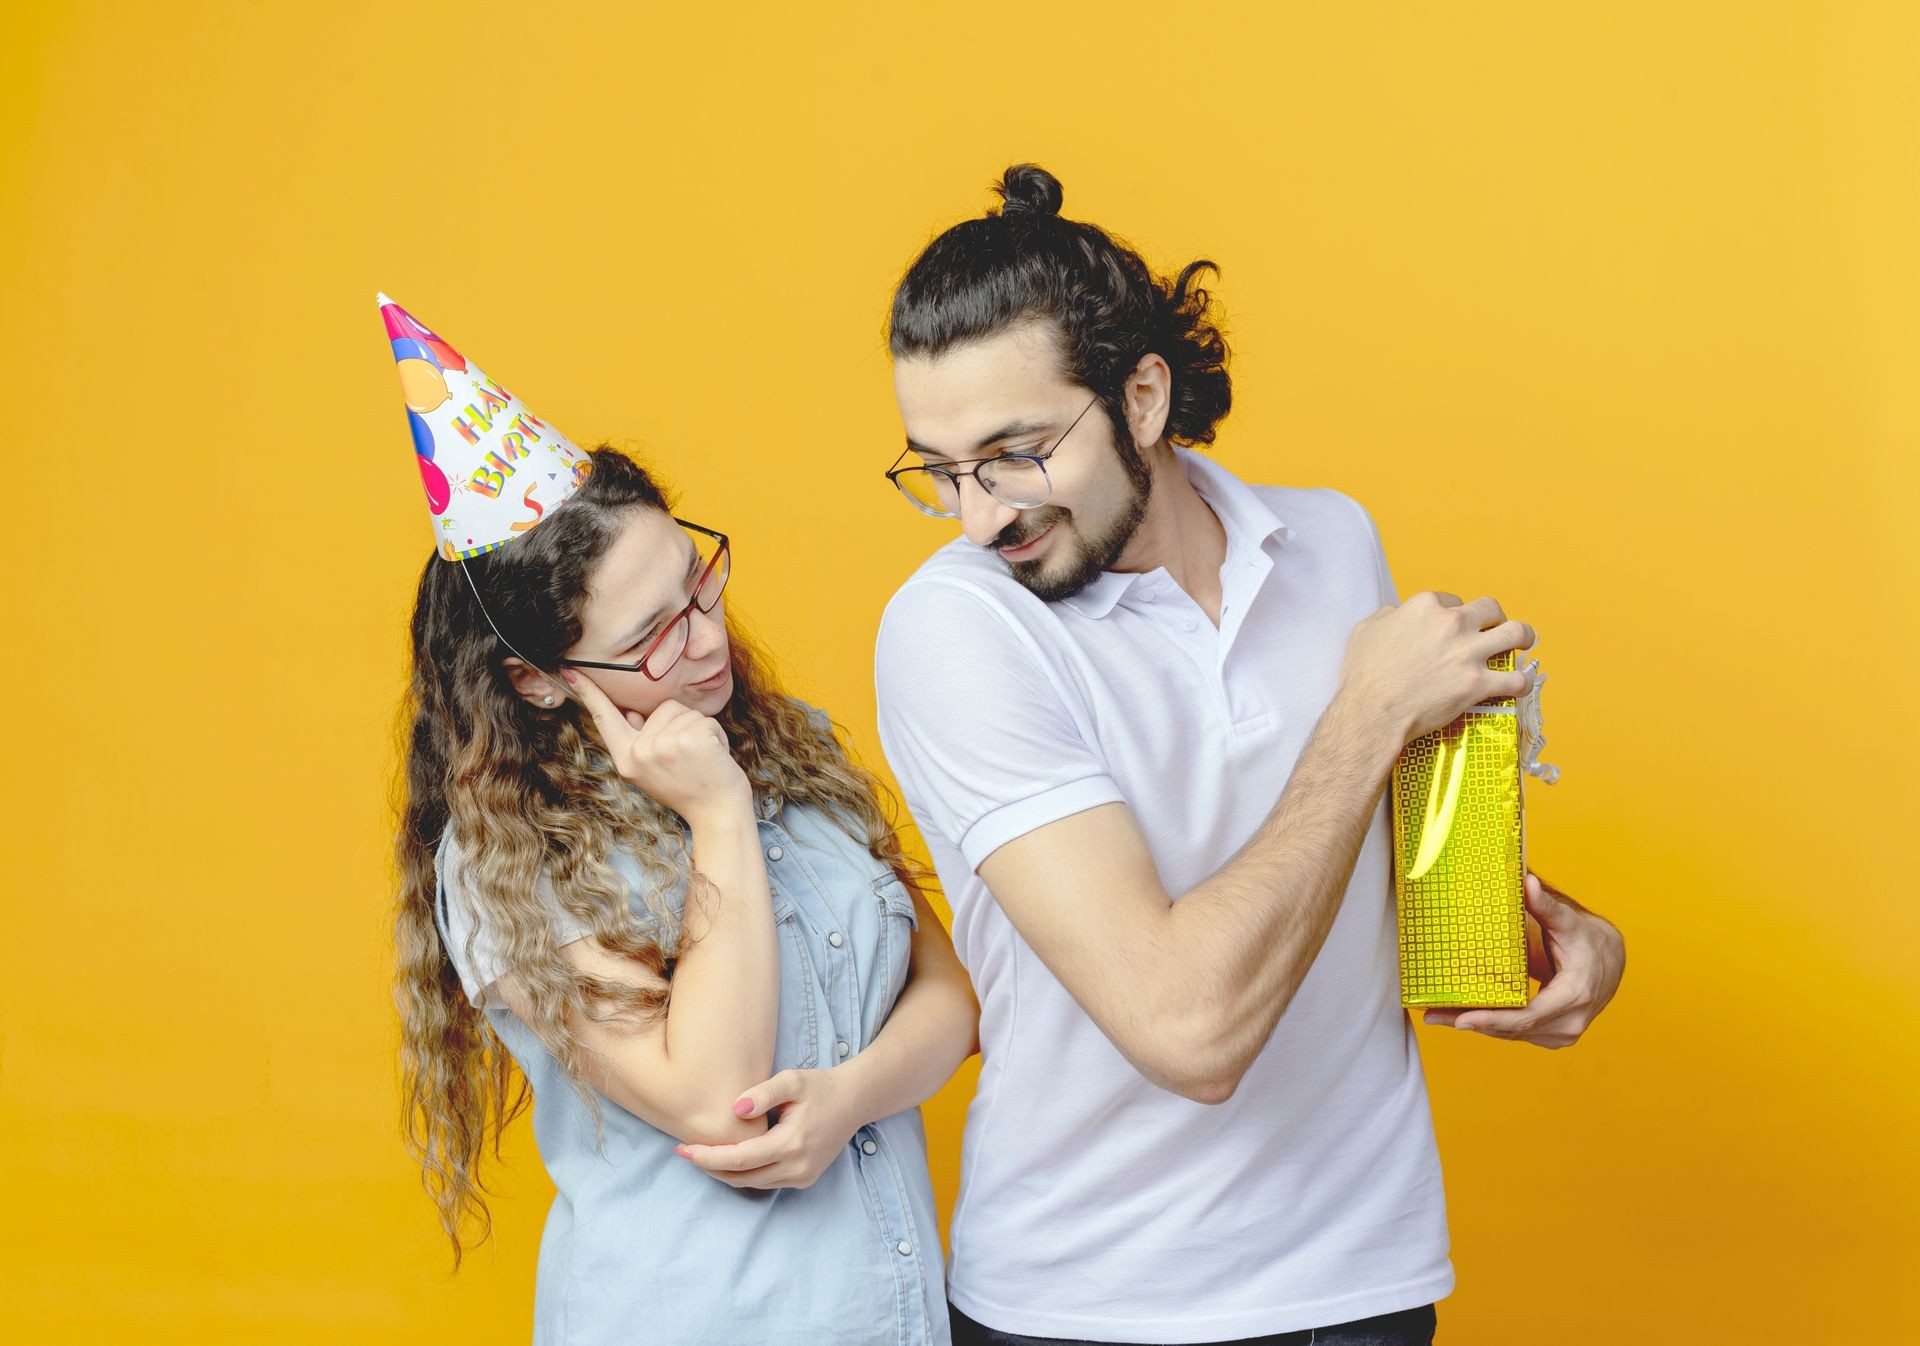 A boy and girl holding customized gift celebrating birthday